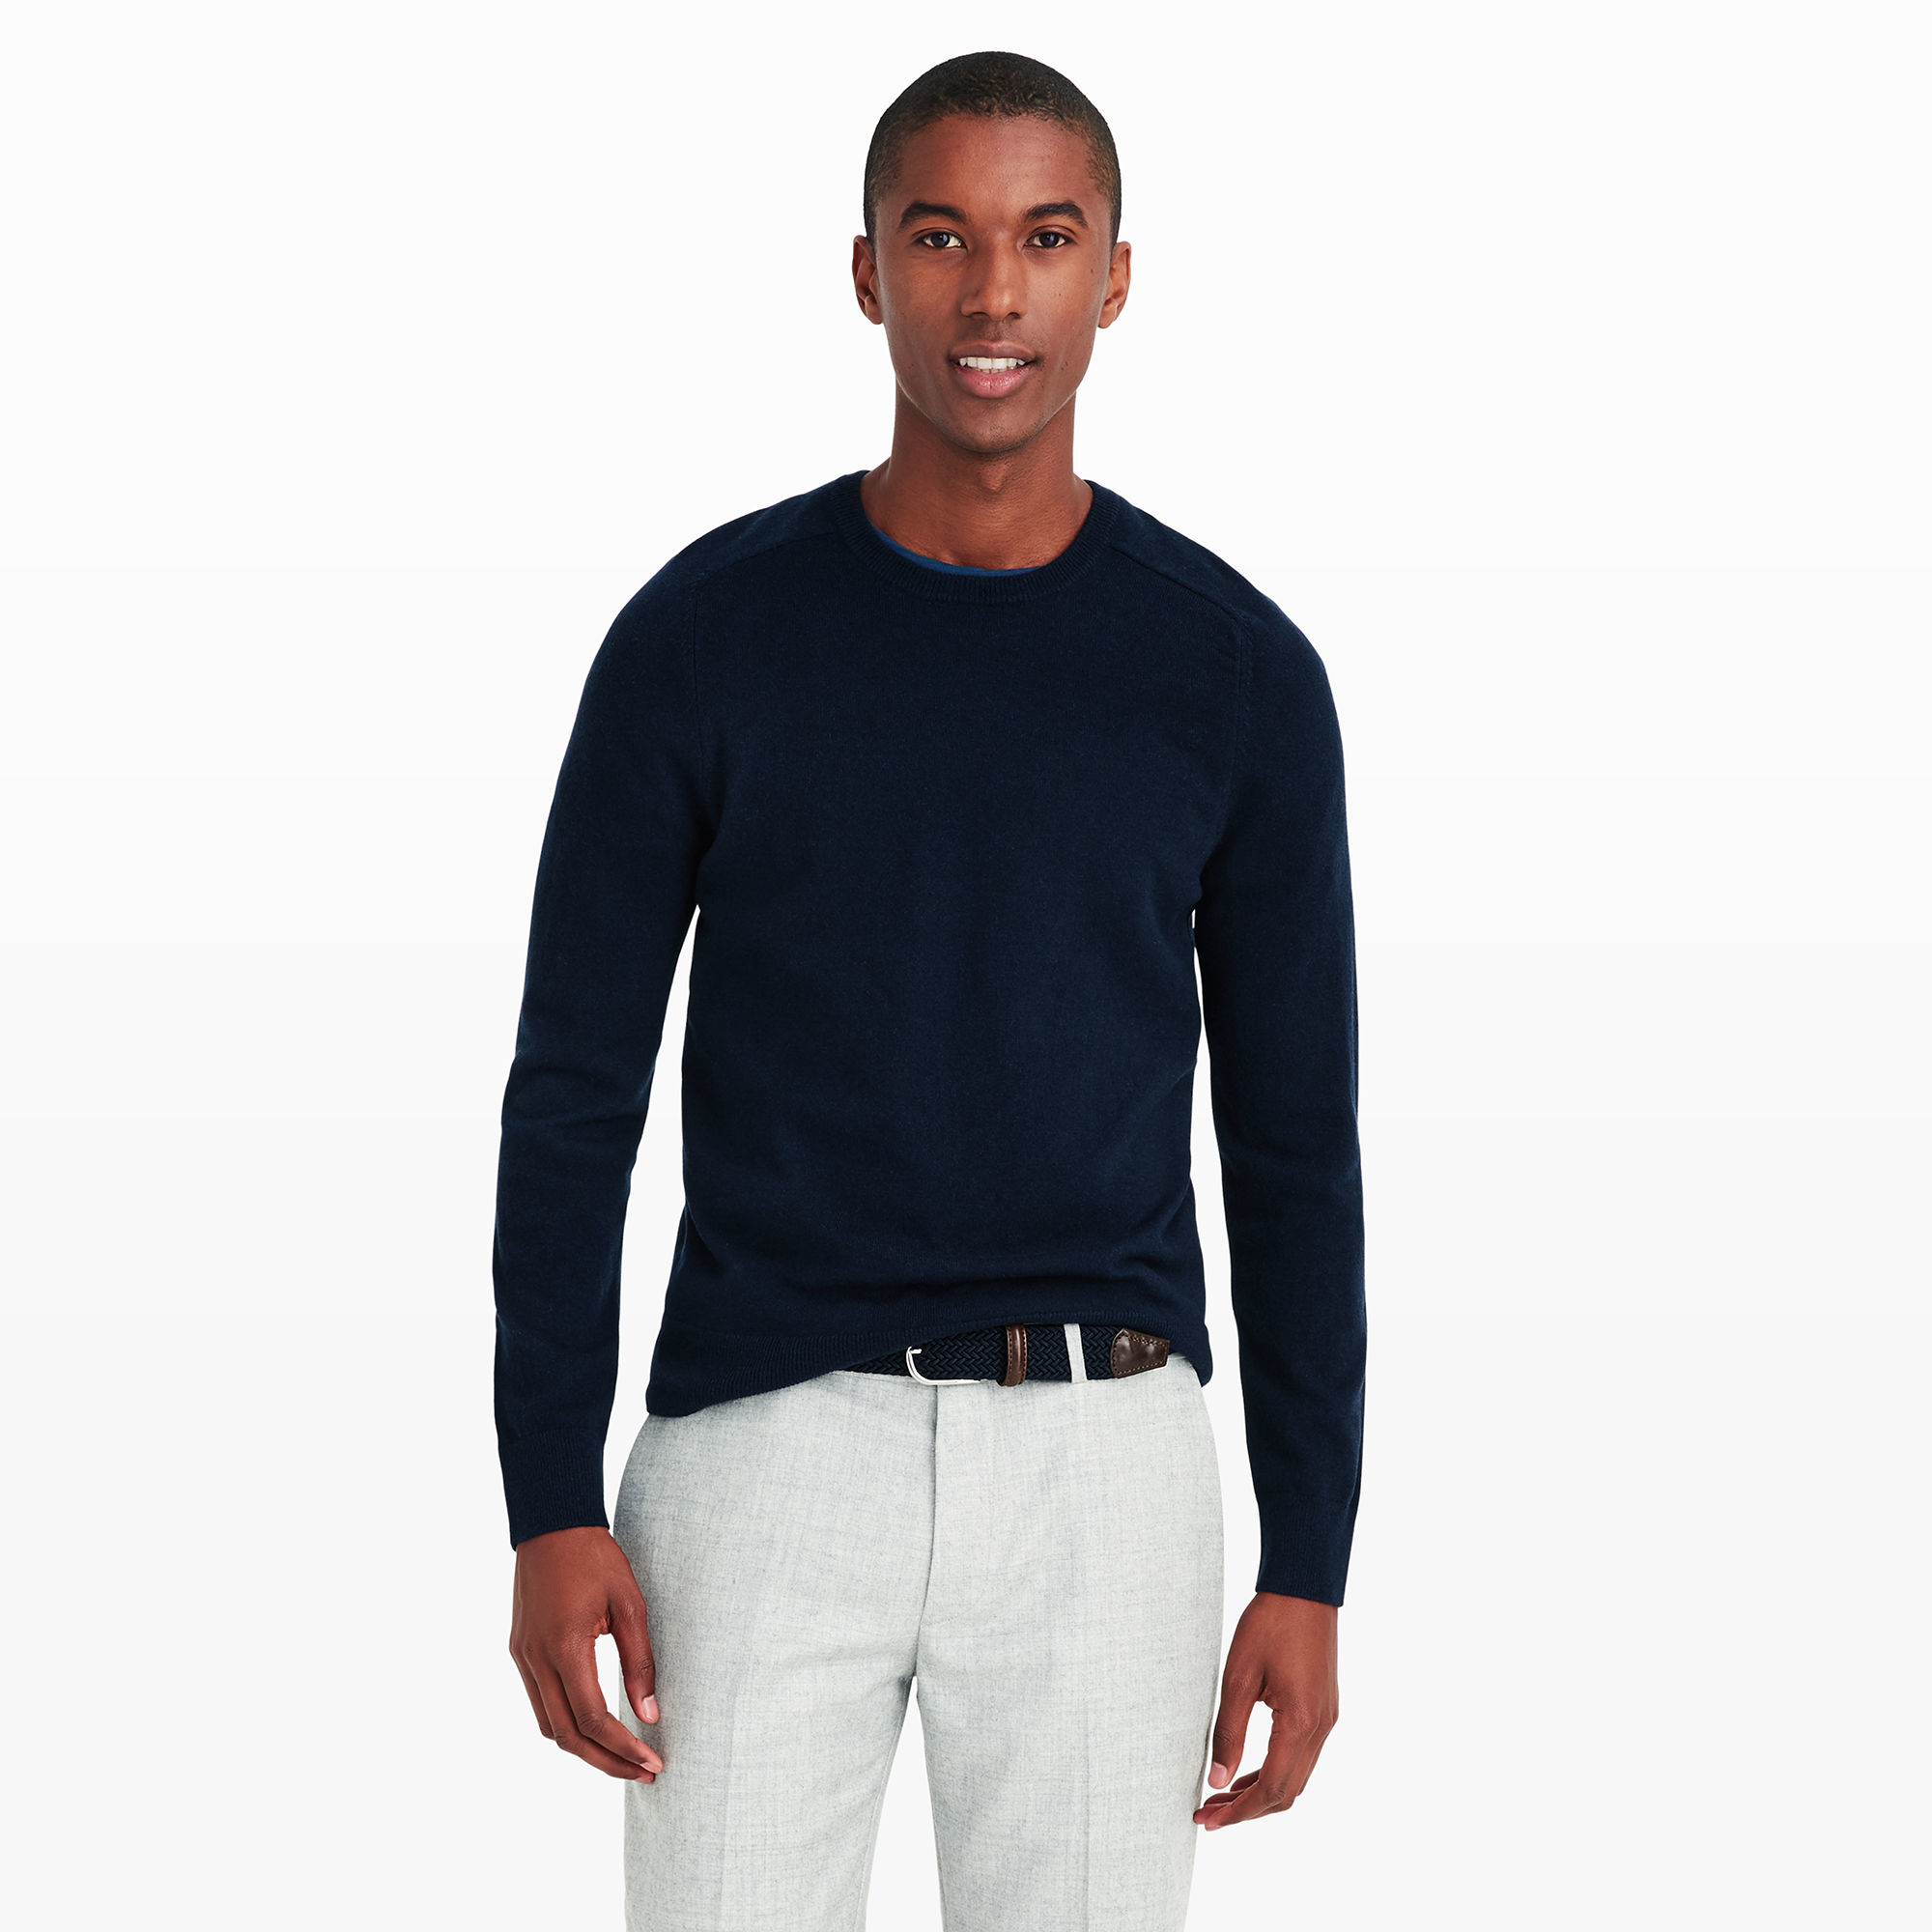 Lyst - Club monaco Cashmere Crew Sweater in Blue for Men